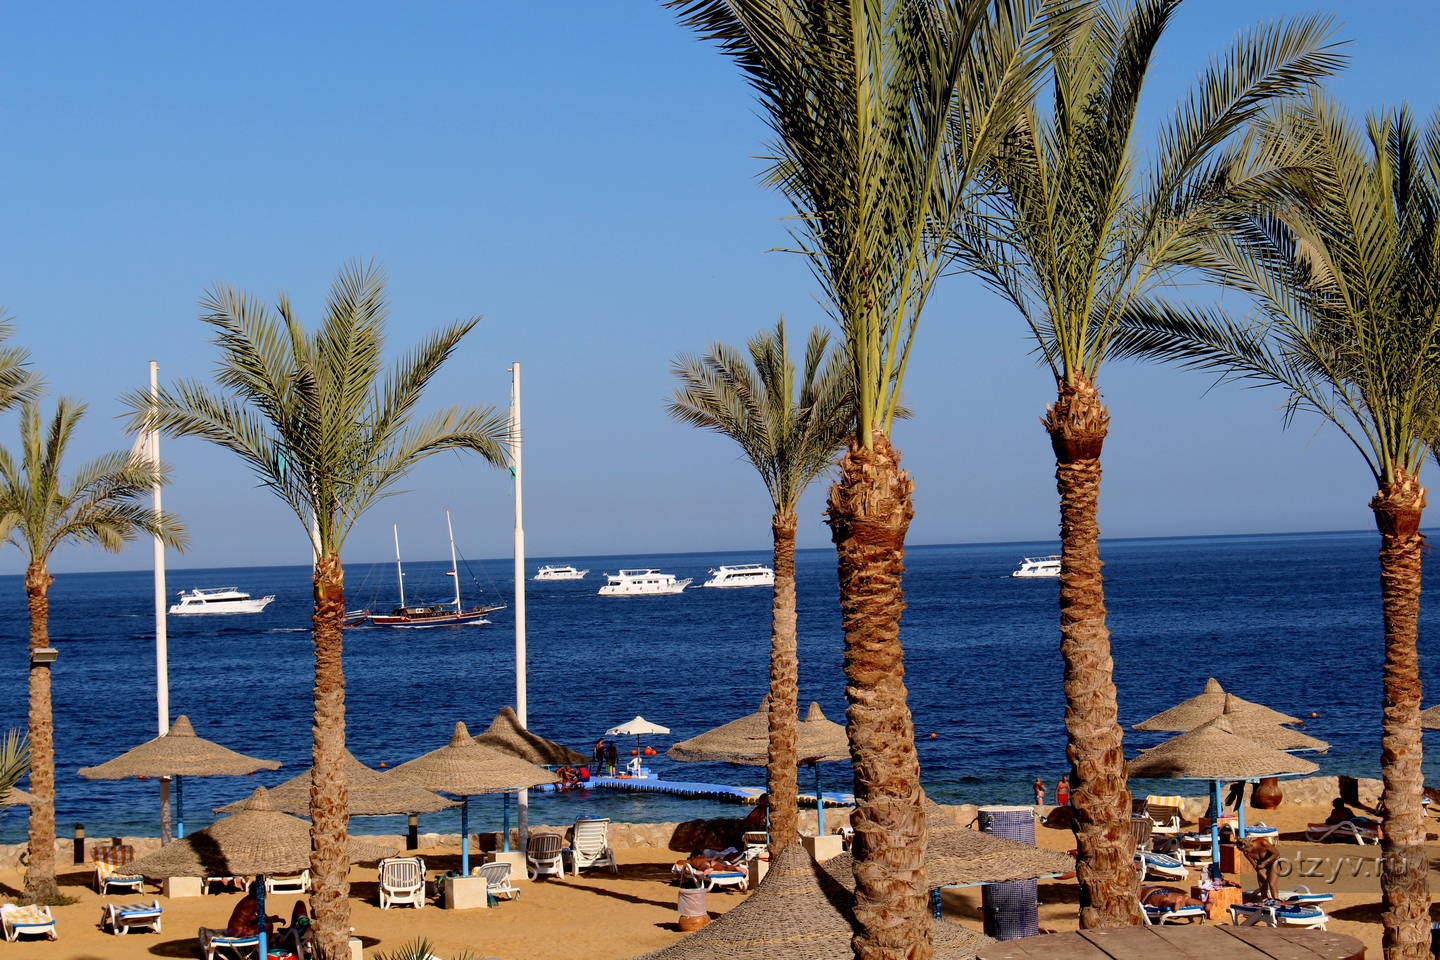 Queen sharm resort beach 4 египет шарм эль шейх отель